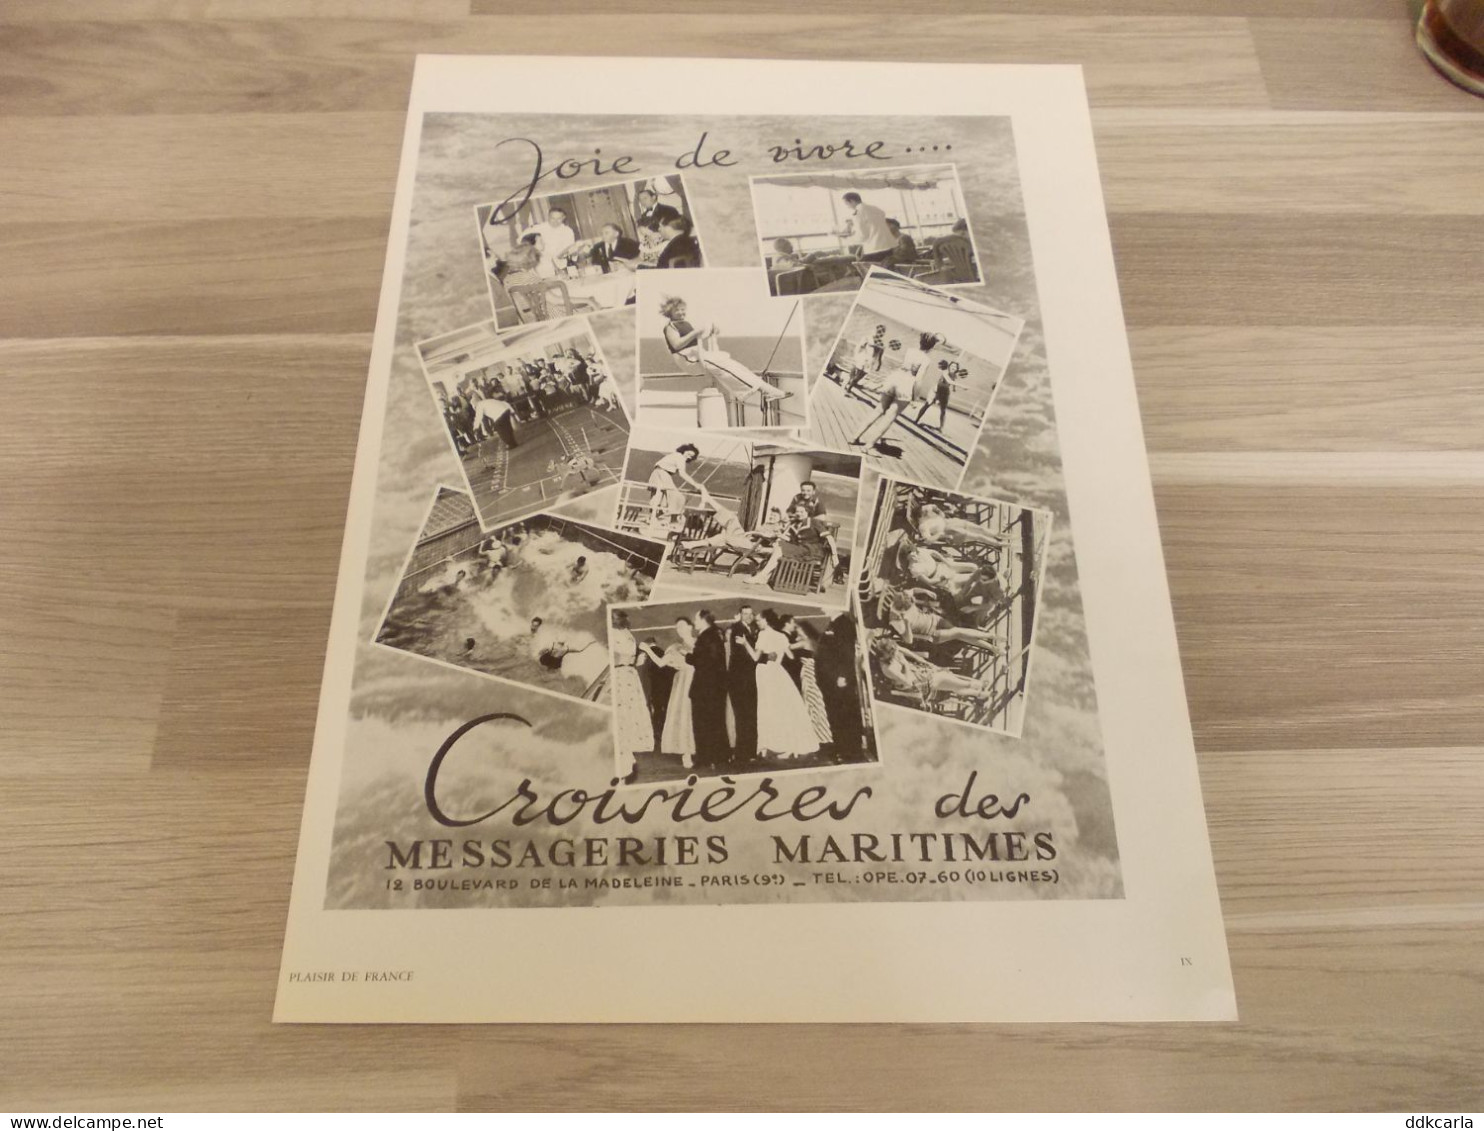 Reclame Advertentie Uit Oud Tijdschrift 1952 - Joie De Vivre Croisières Des Messageries Maritimes - Advertising